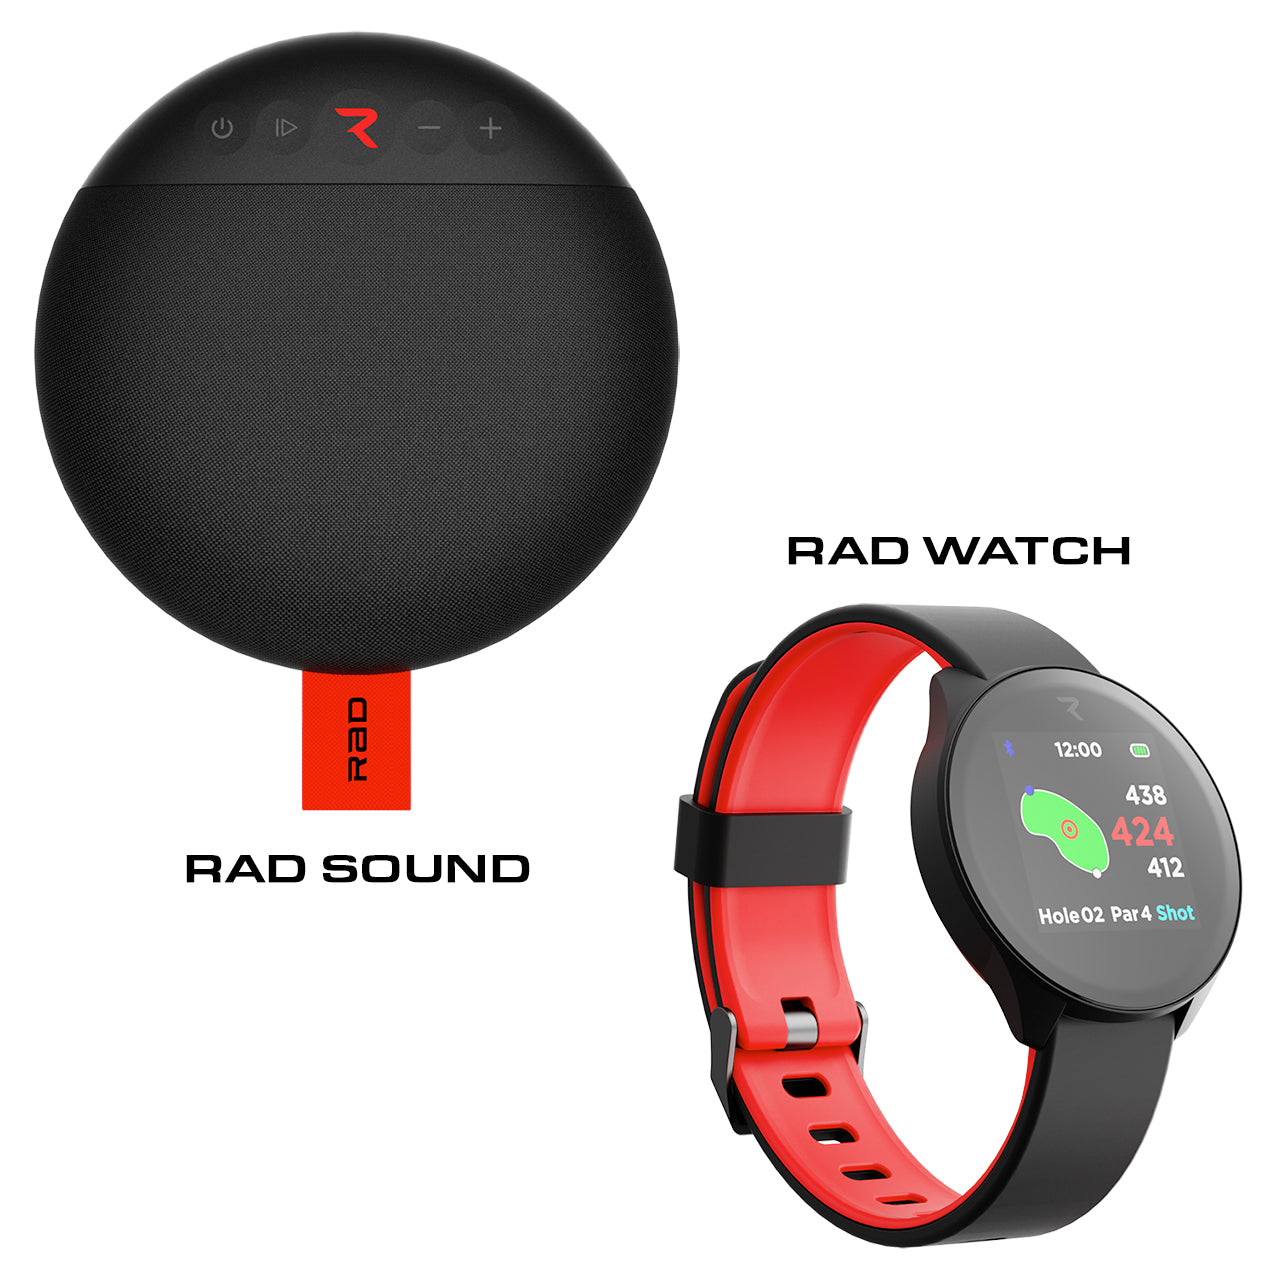 Rad Watch and Sound Bundle